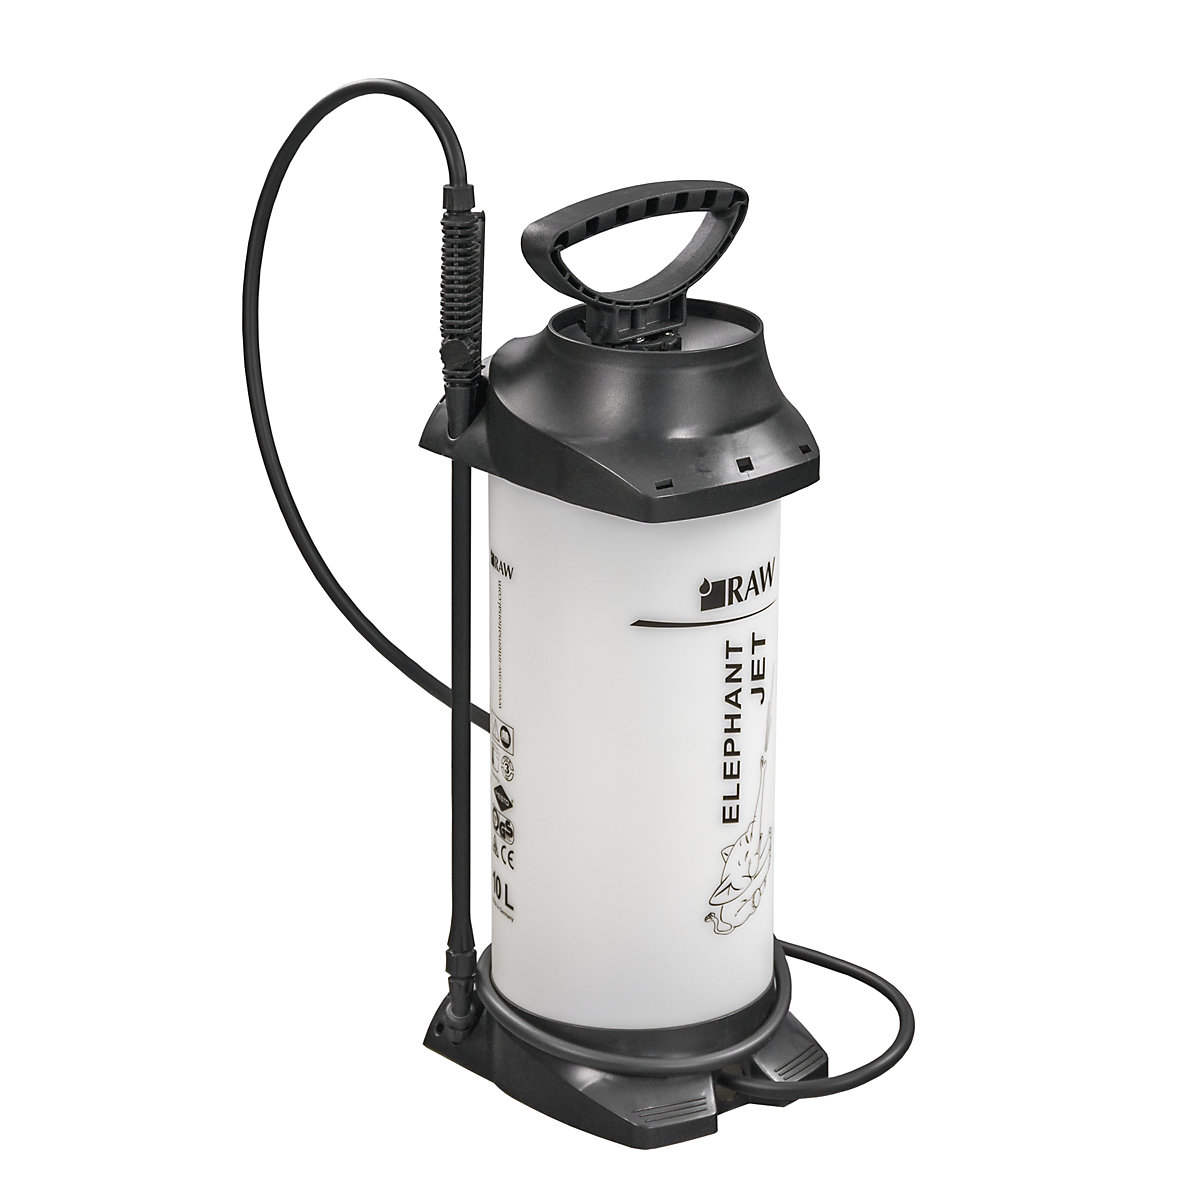 Pressure sprayer (Product illustration 2)